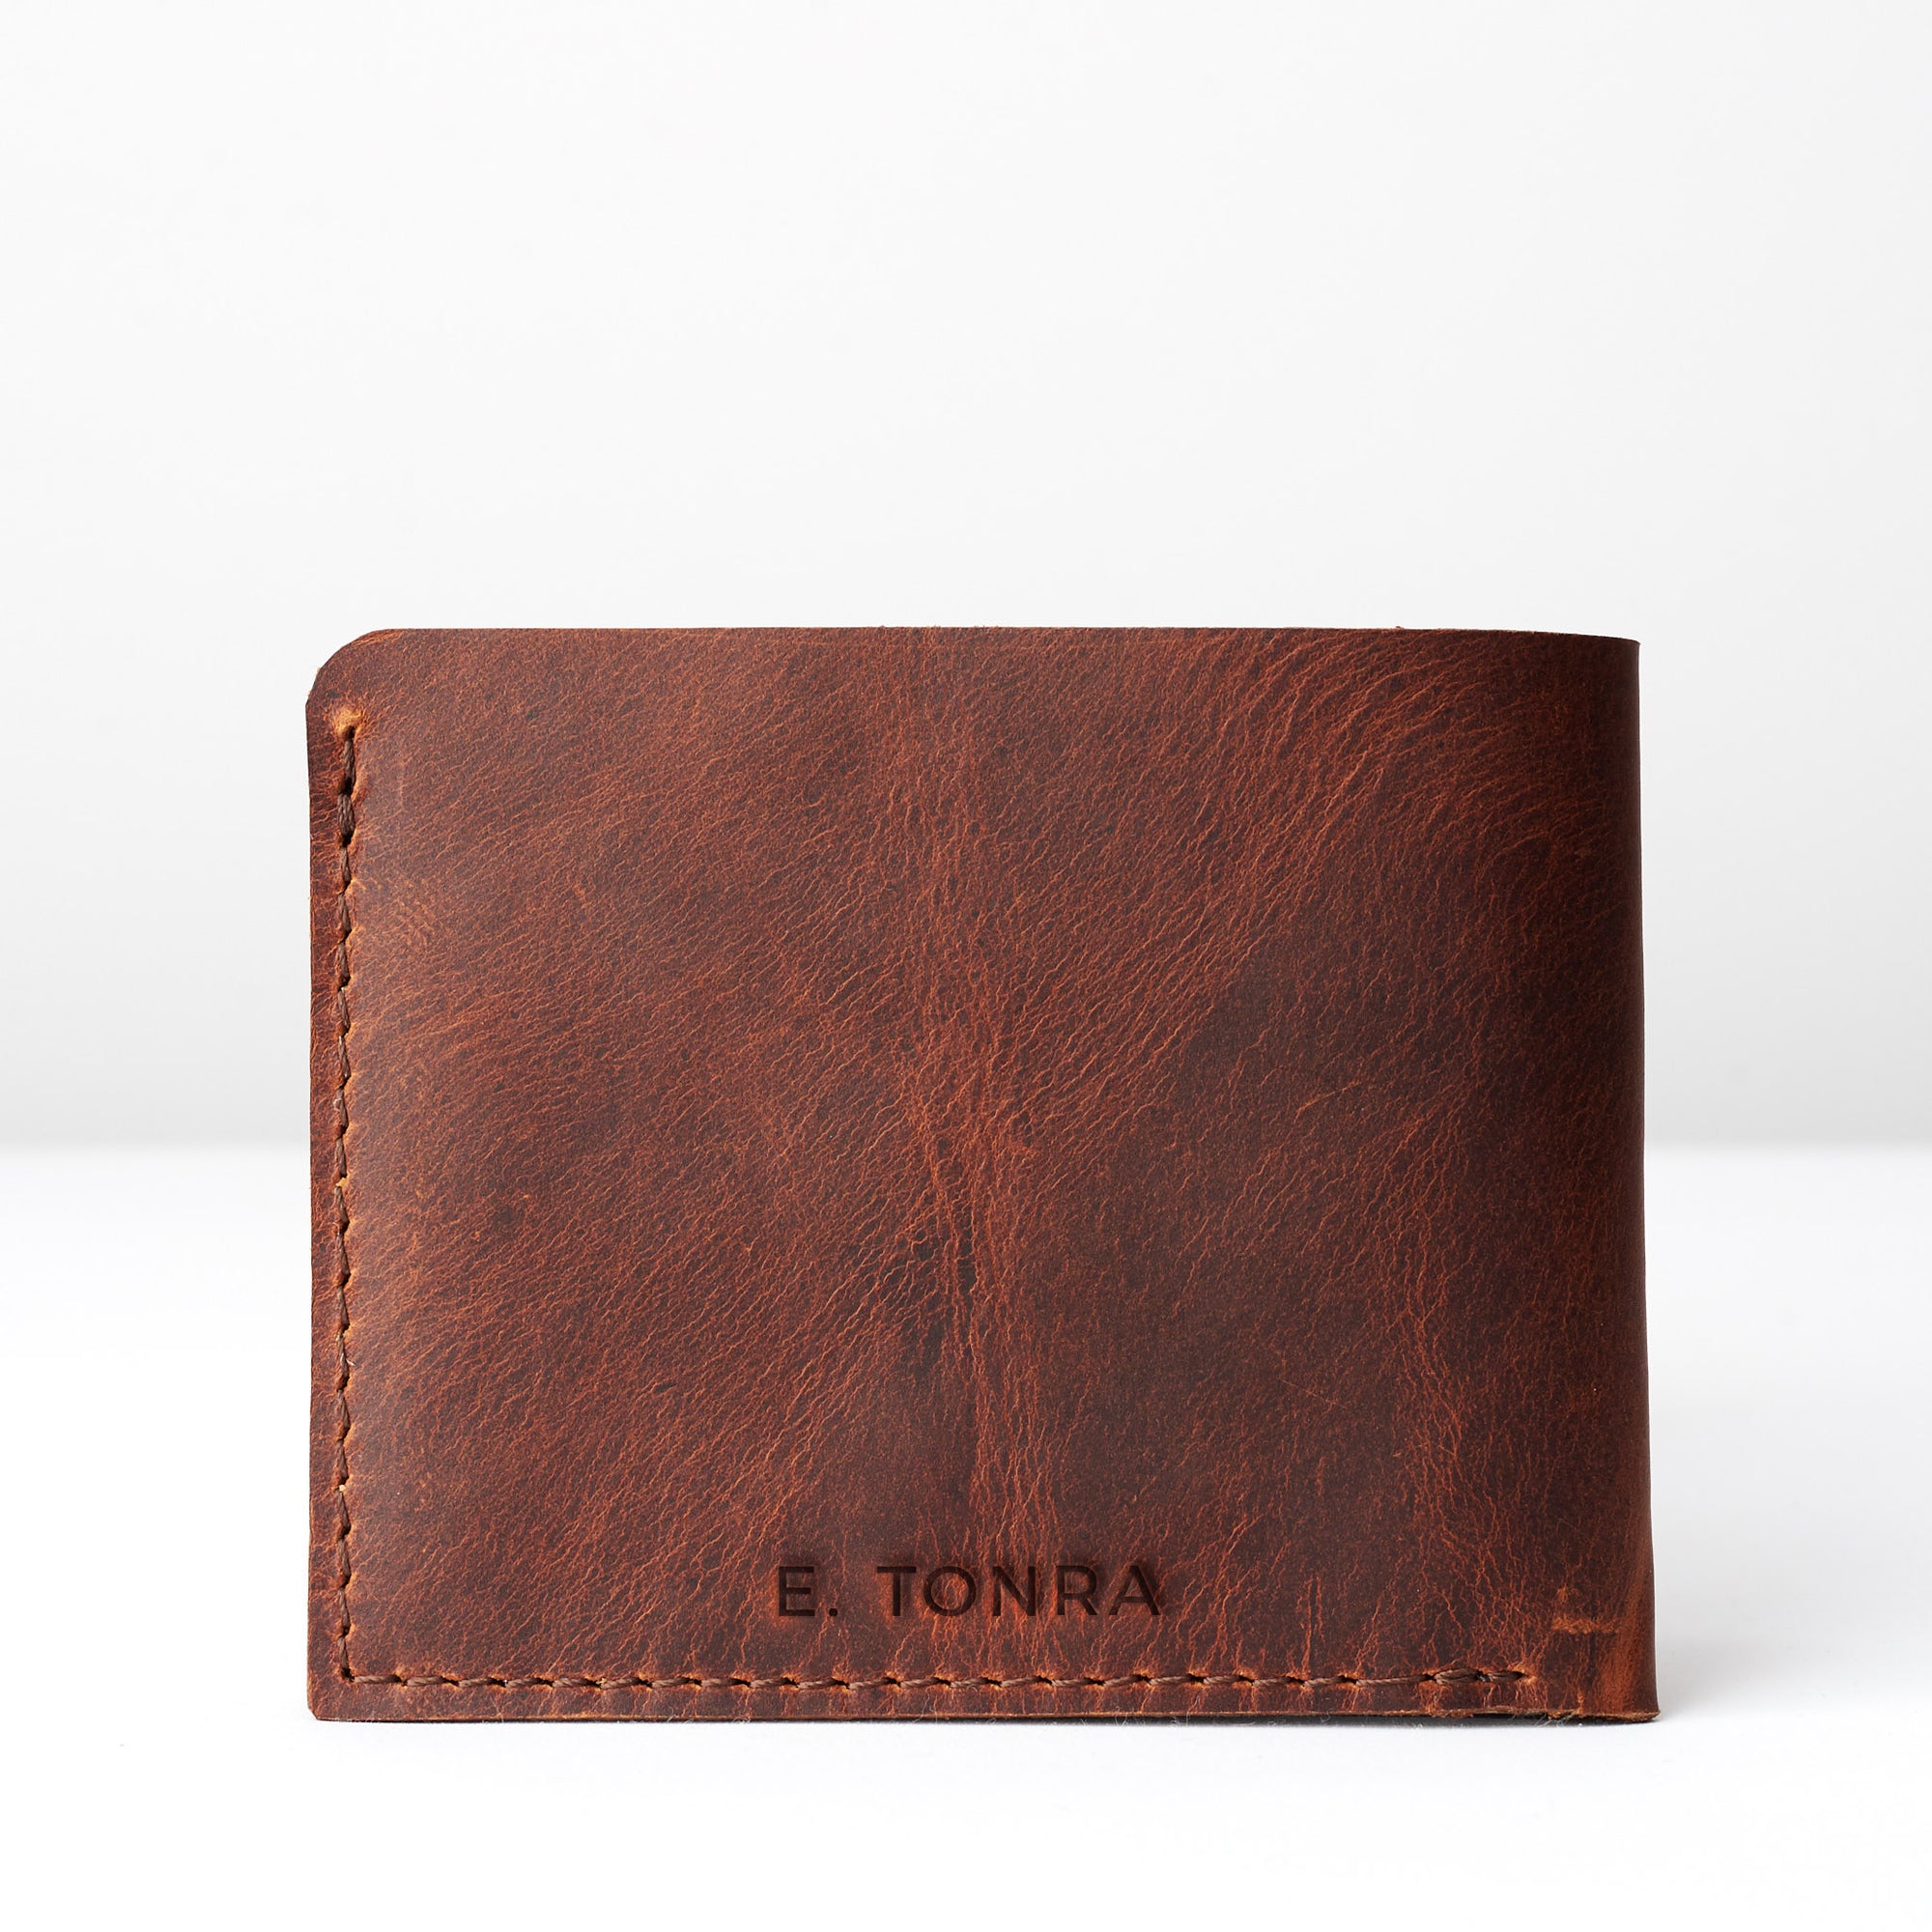 Engraving. Leather sandstone slim wallet gifts for men handmade accessories. minimalist full grain leather thin wallet. Made by Capra Leather. 